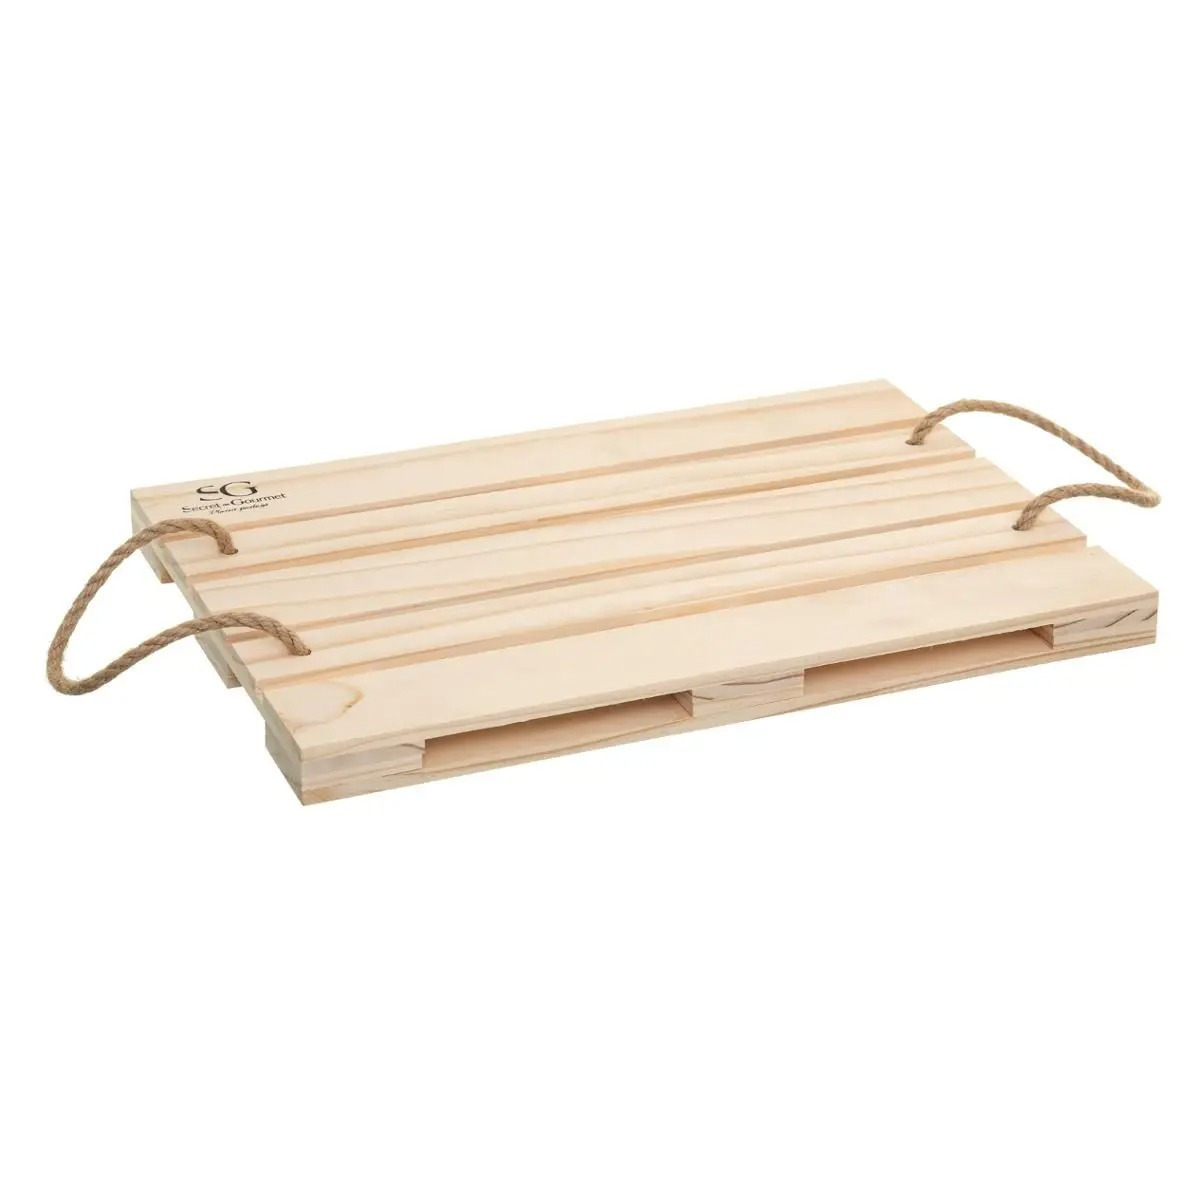 Dienblad-onderzetter pallet hout rechthoekig 42 x 28 cm